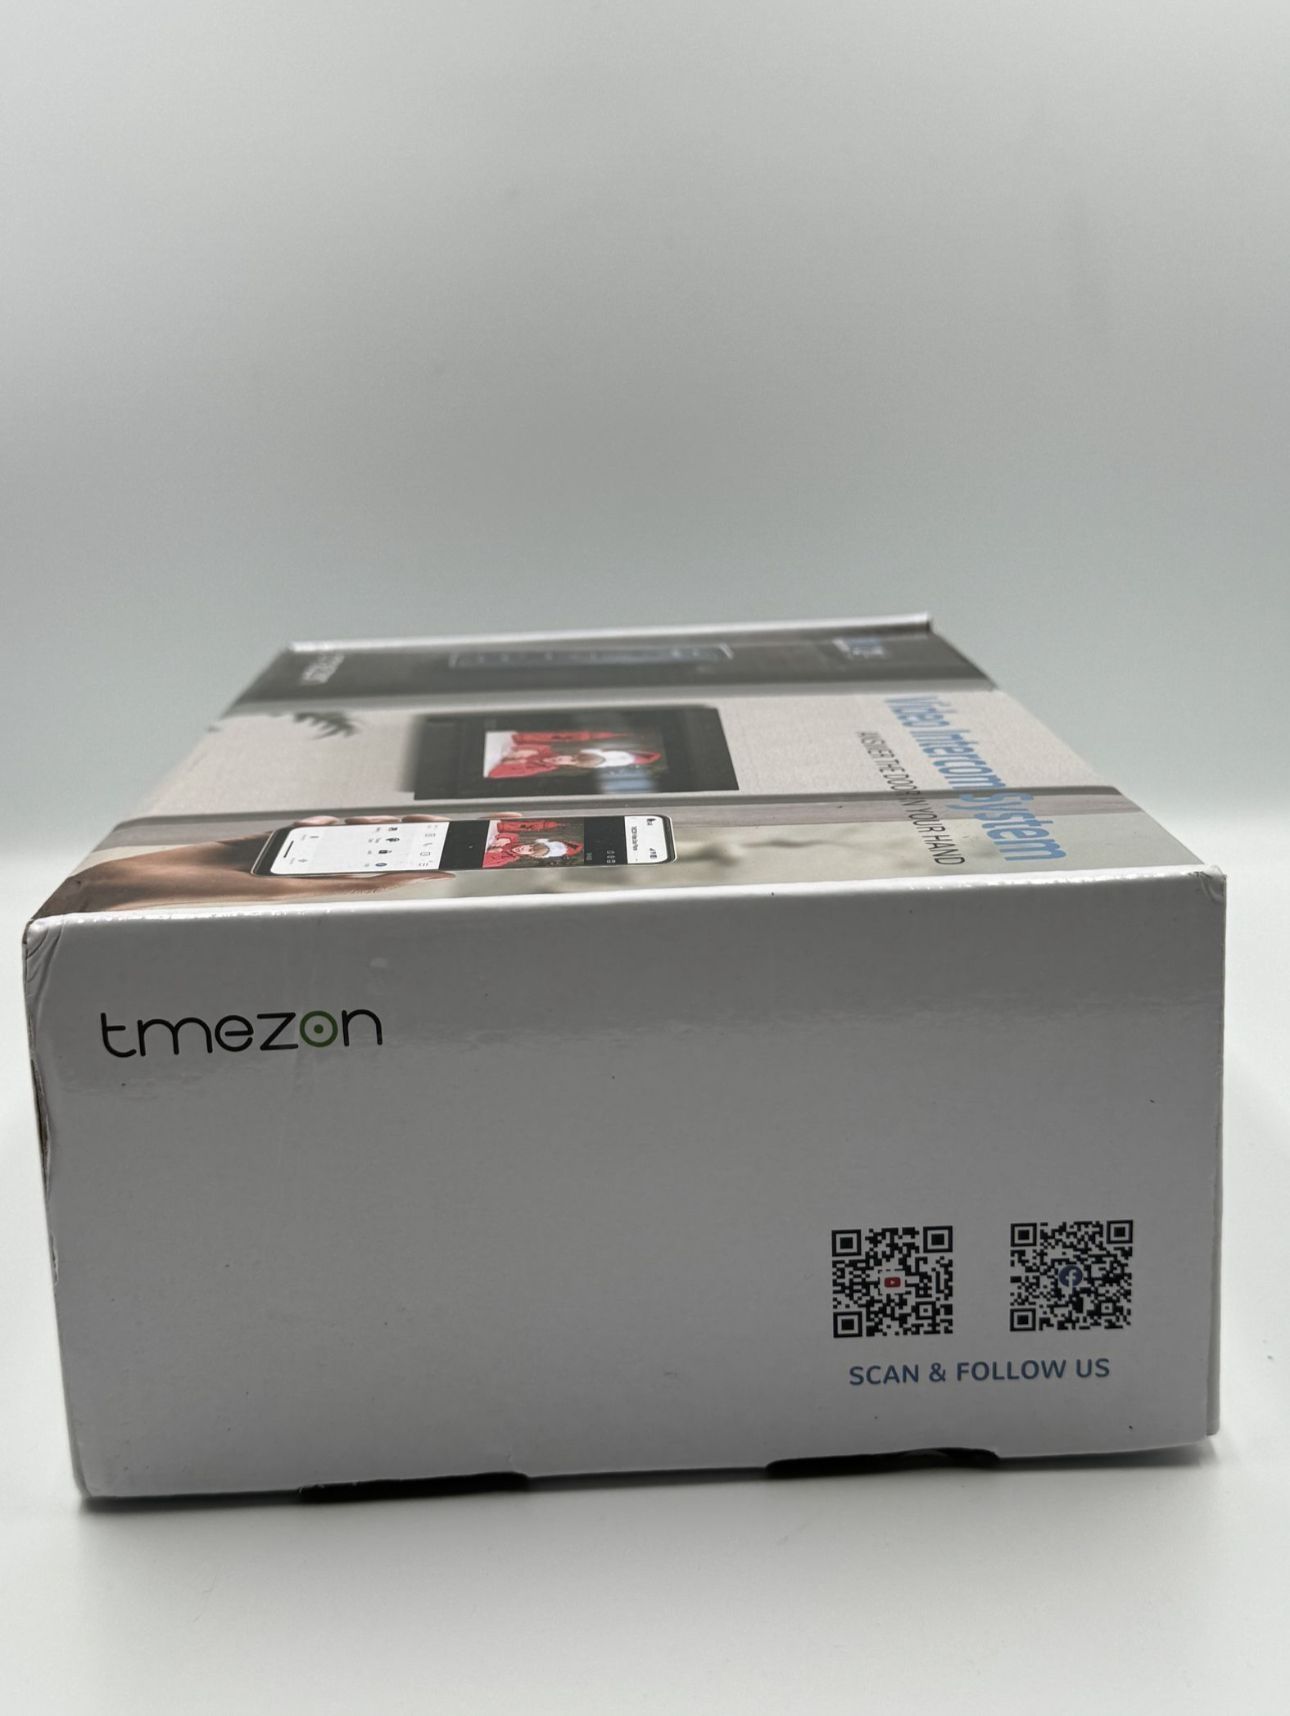 Video Interfon Tmezone Easy instalation